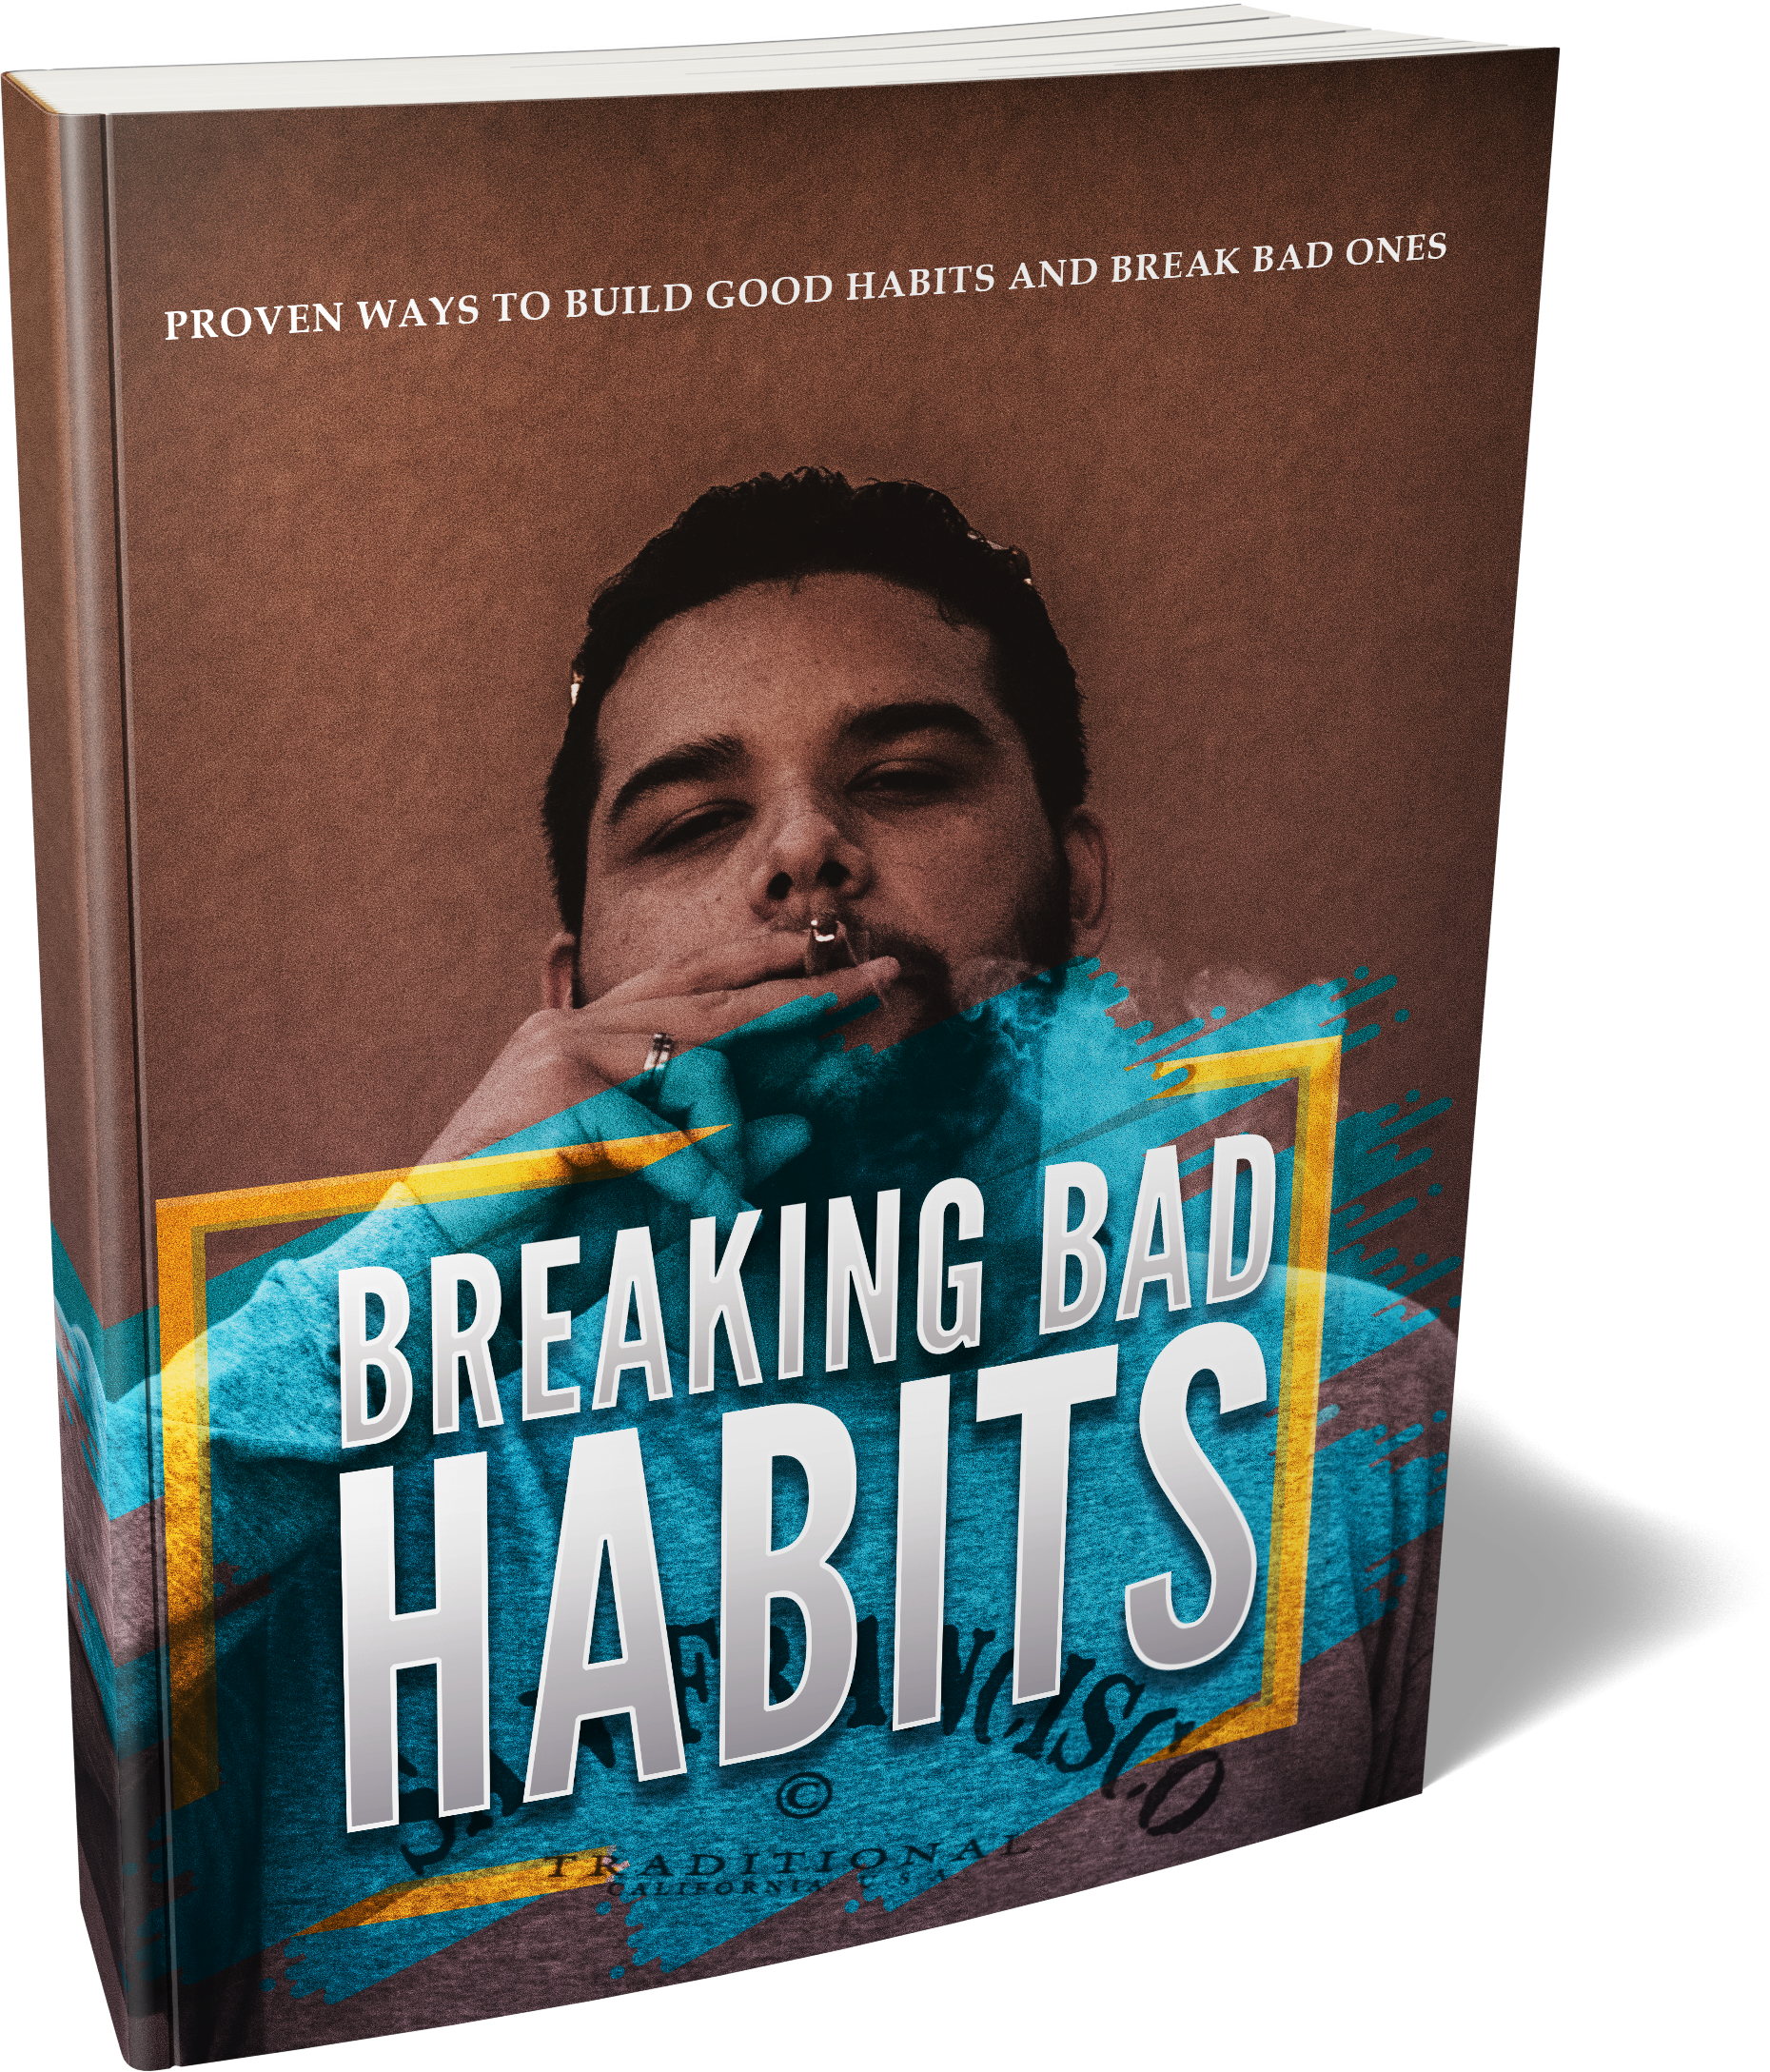 Breaking Bad Habits